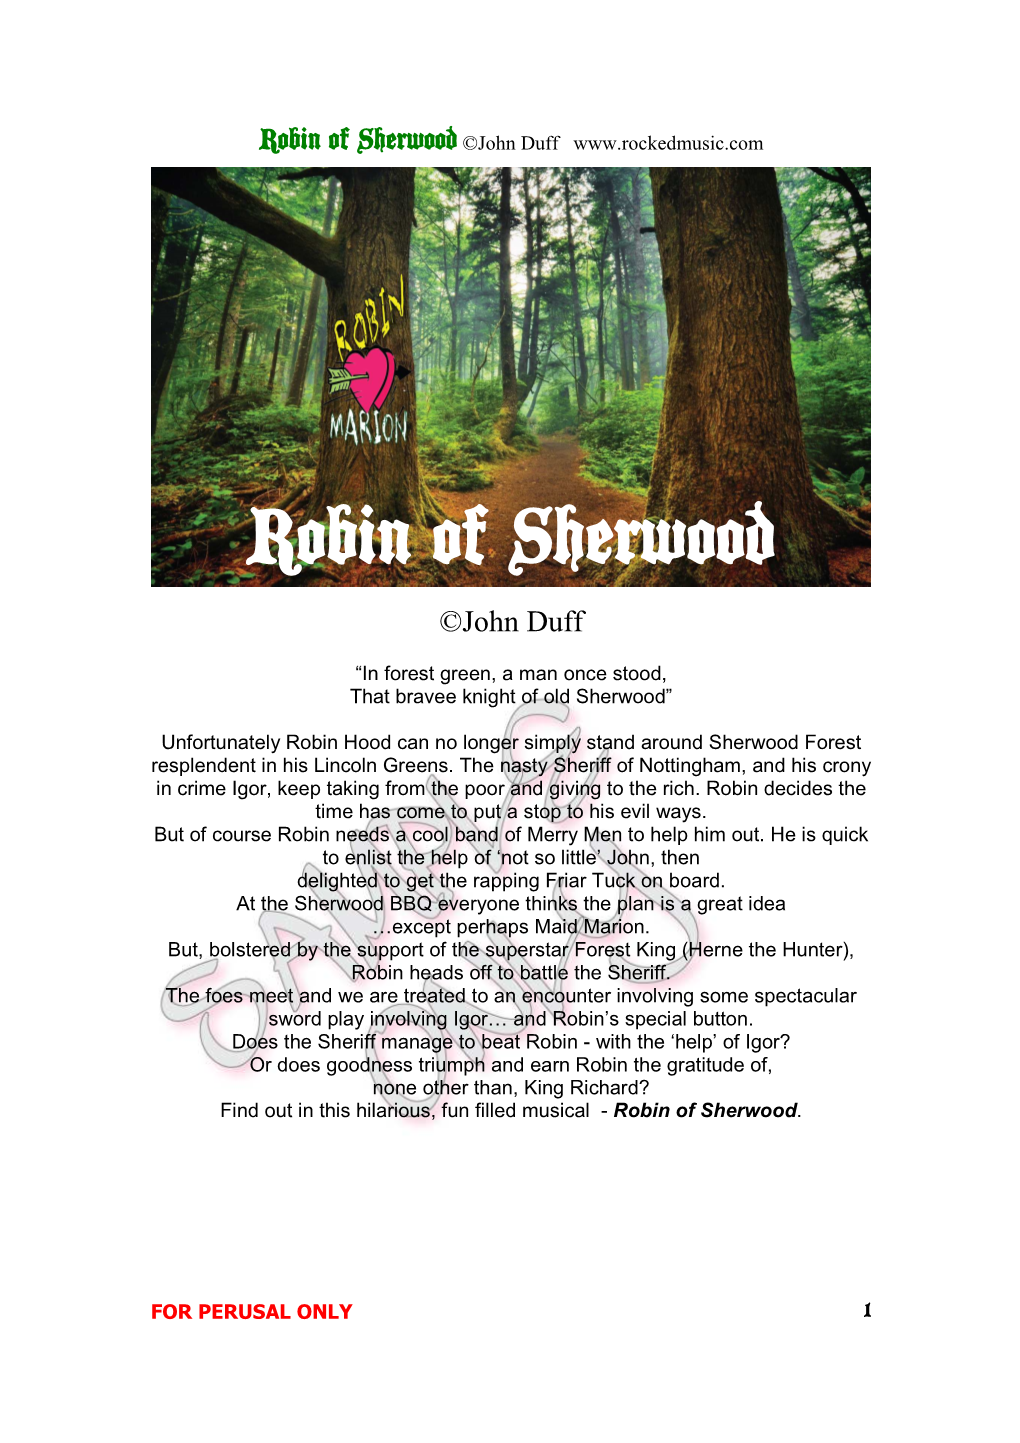 Robin of Sherwood PERUSAL Script and Lyrics